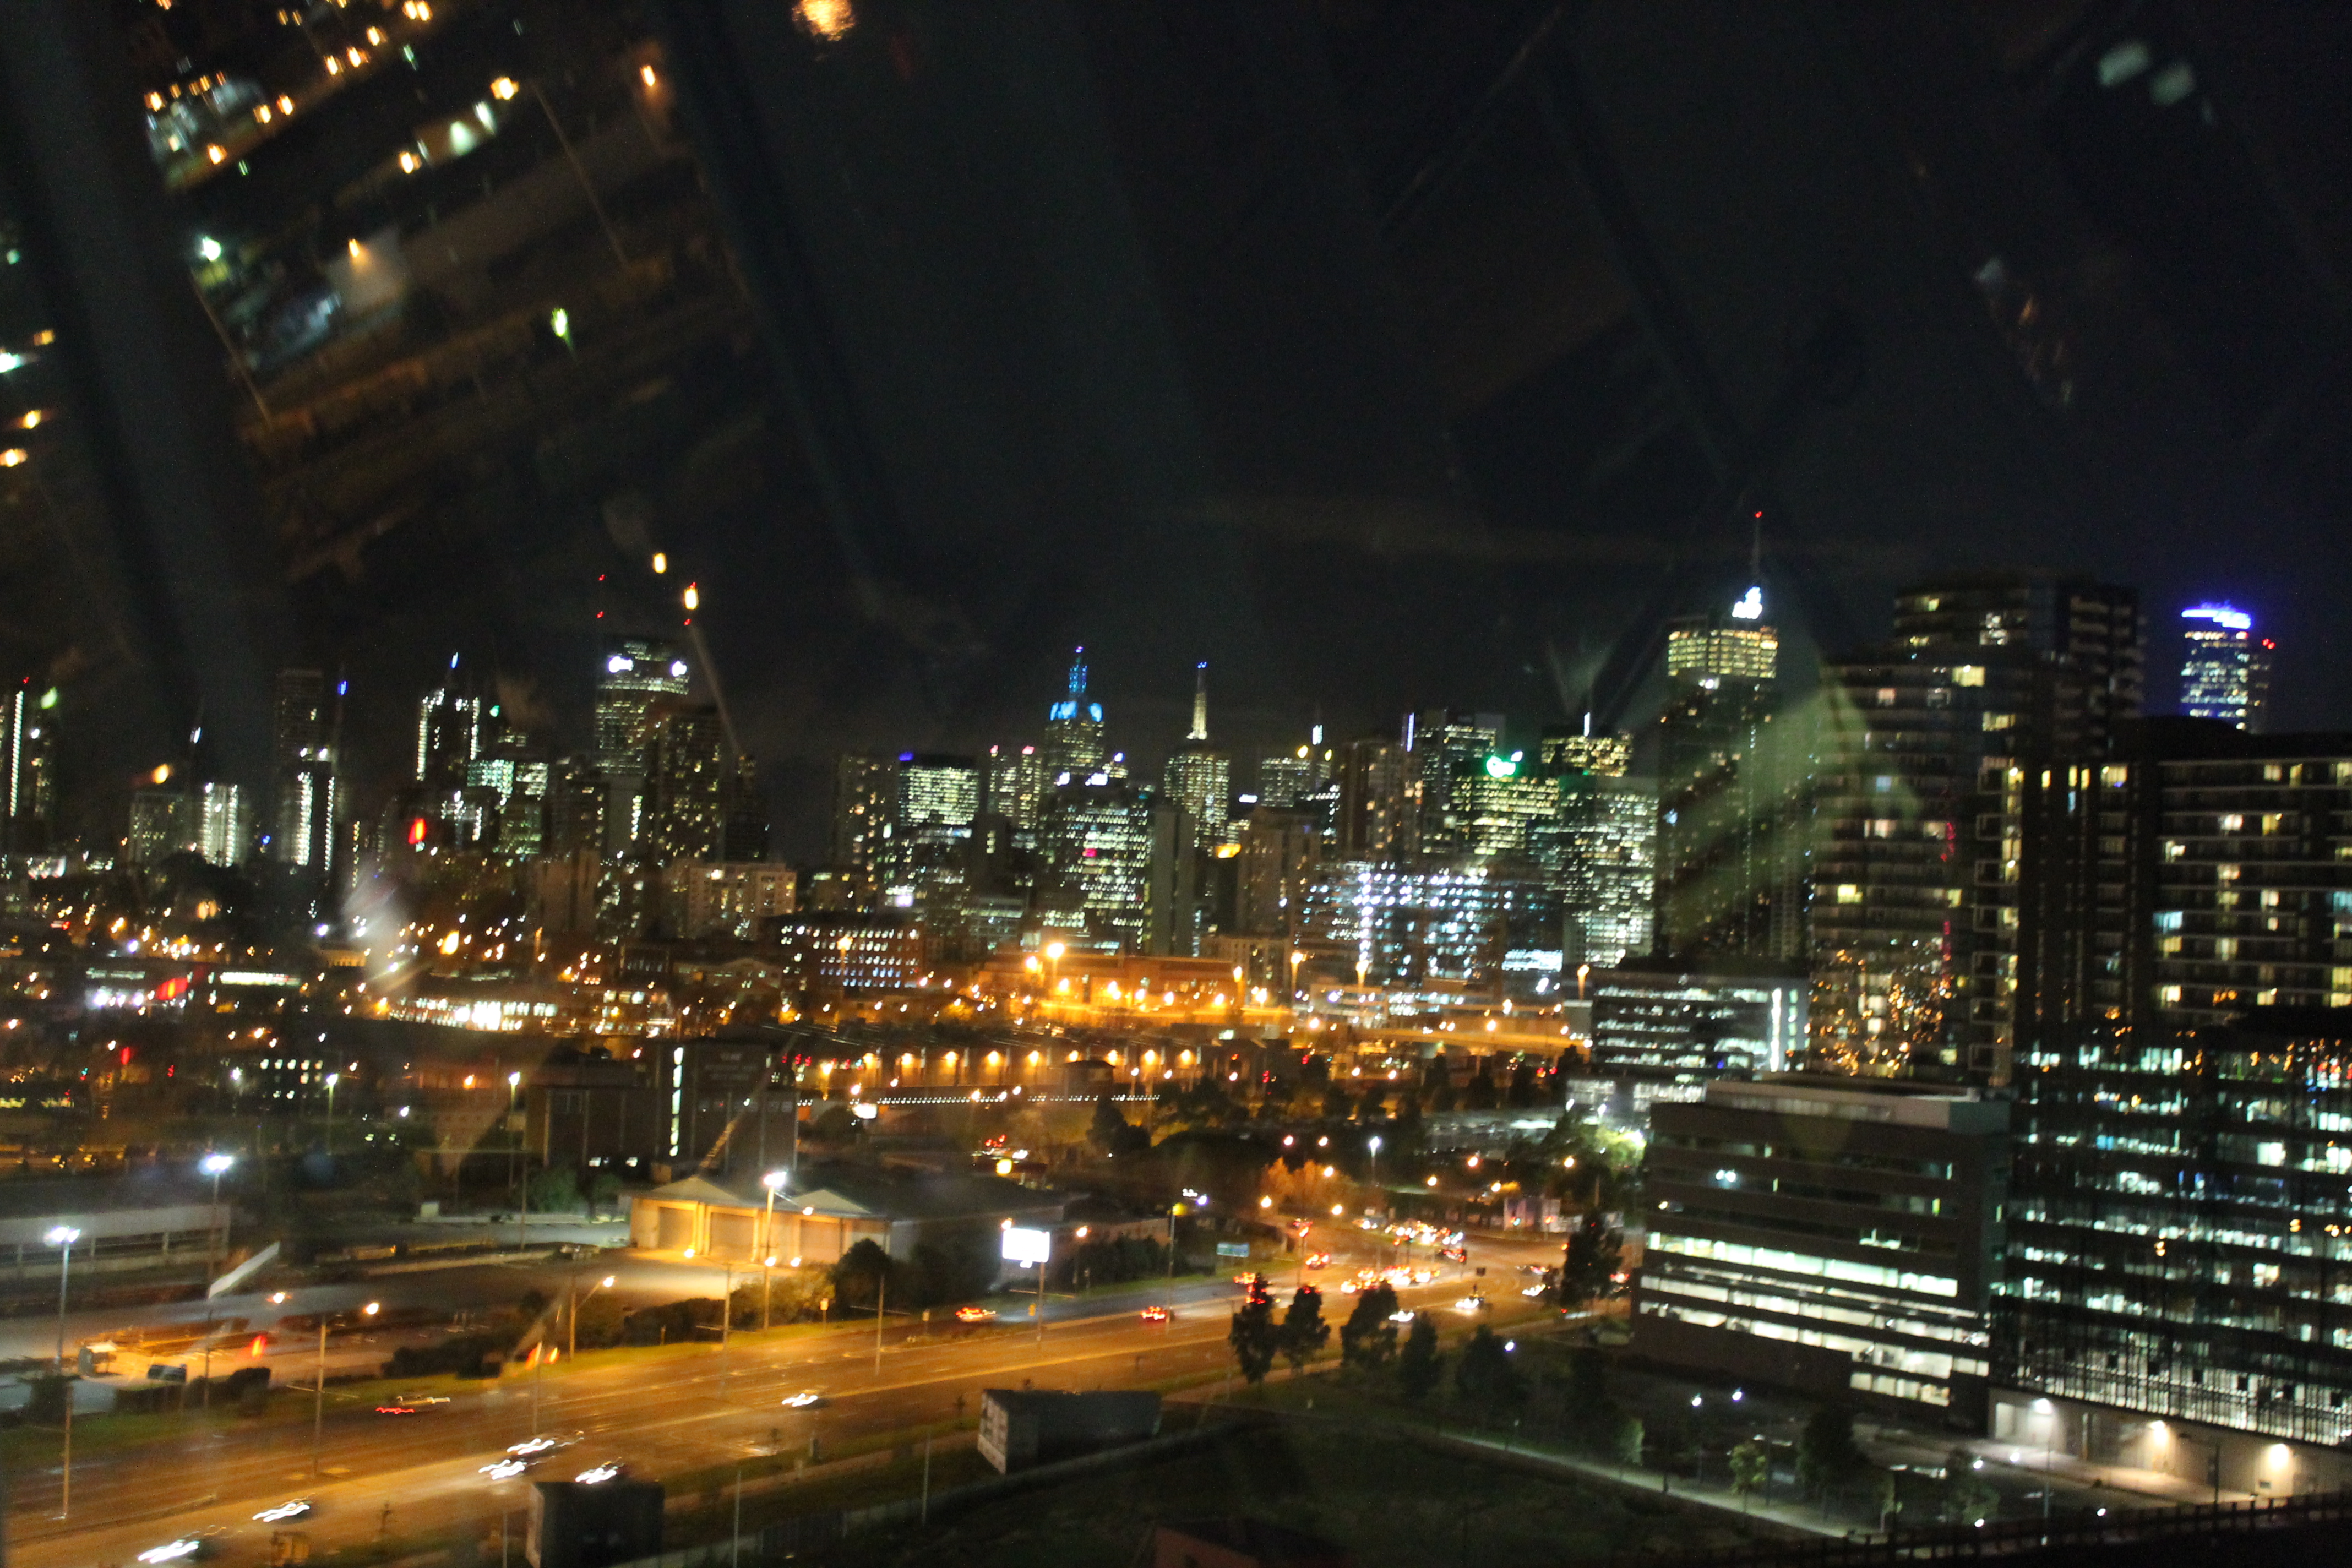 Melbourne CBD at night